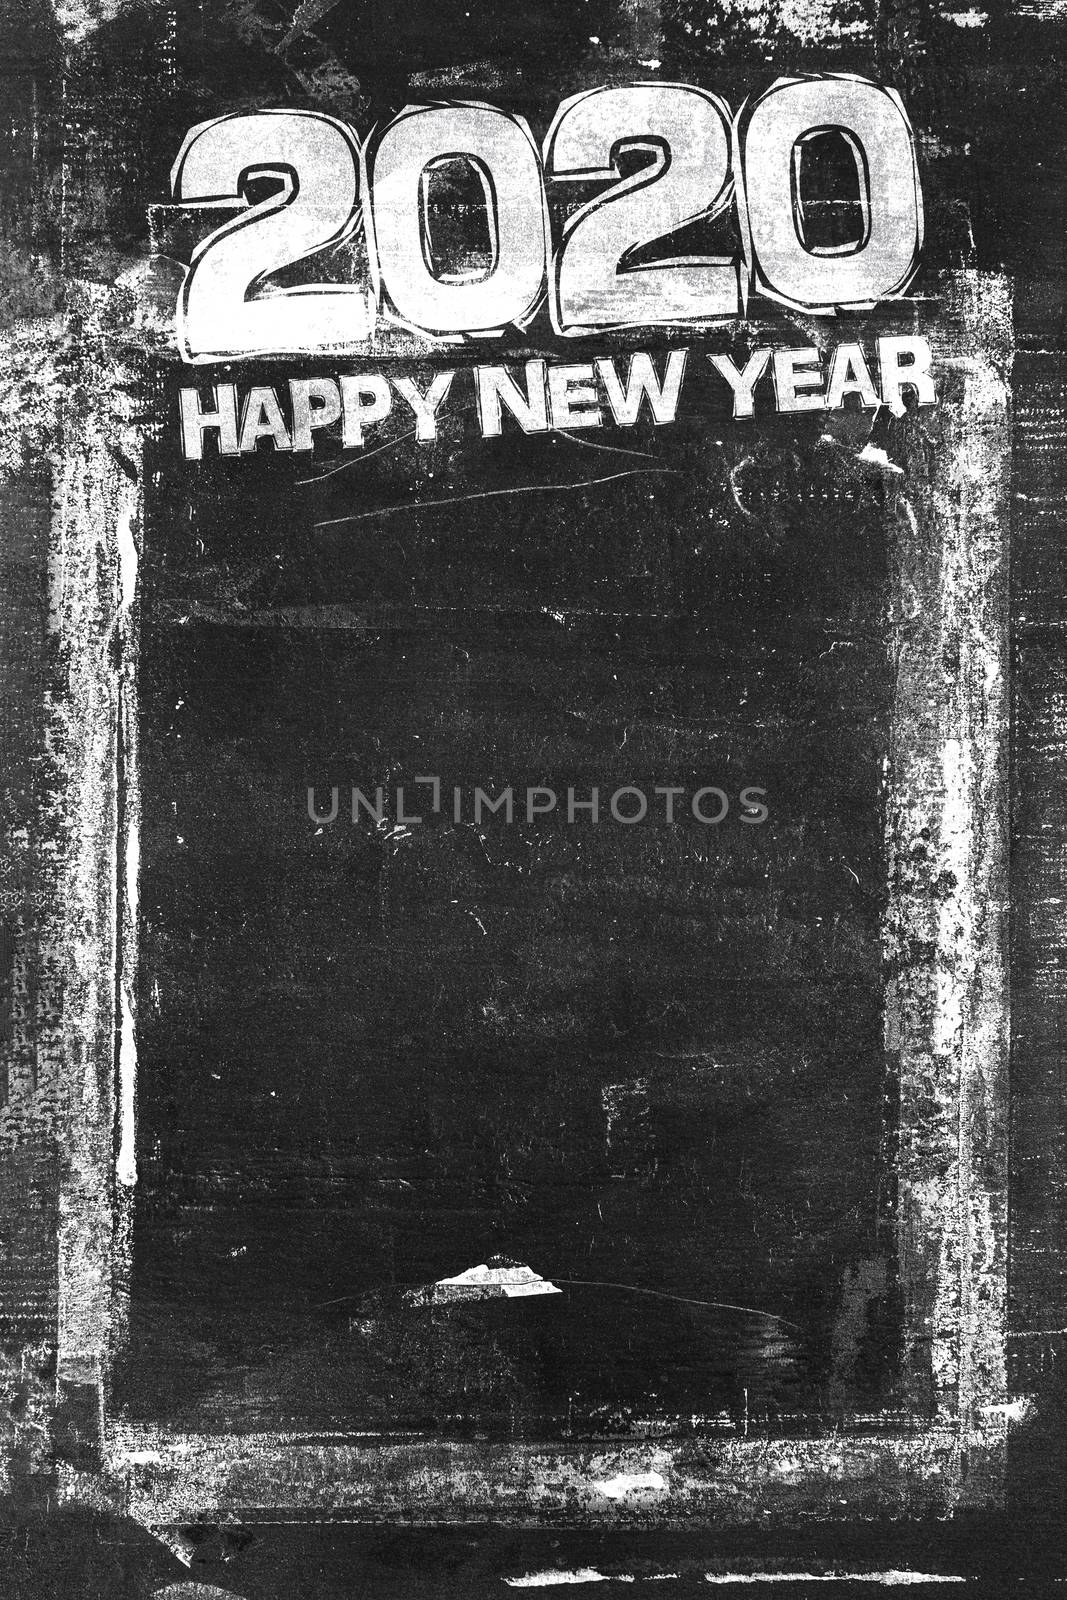 Happy New Year 2020 Grungy Chalkboard Background by germanopoli